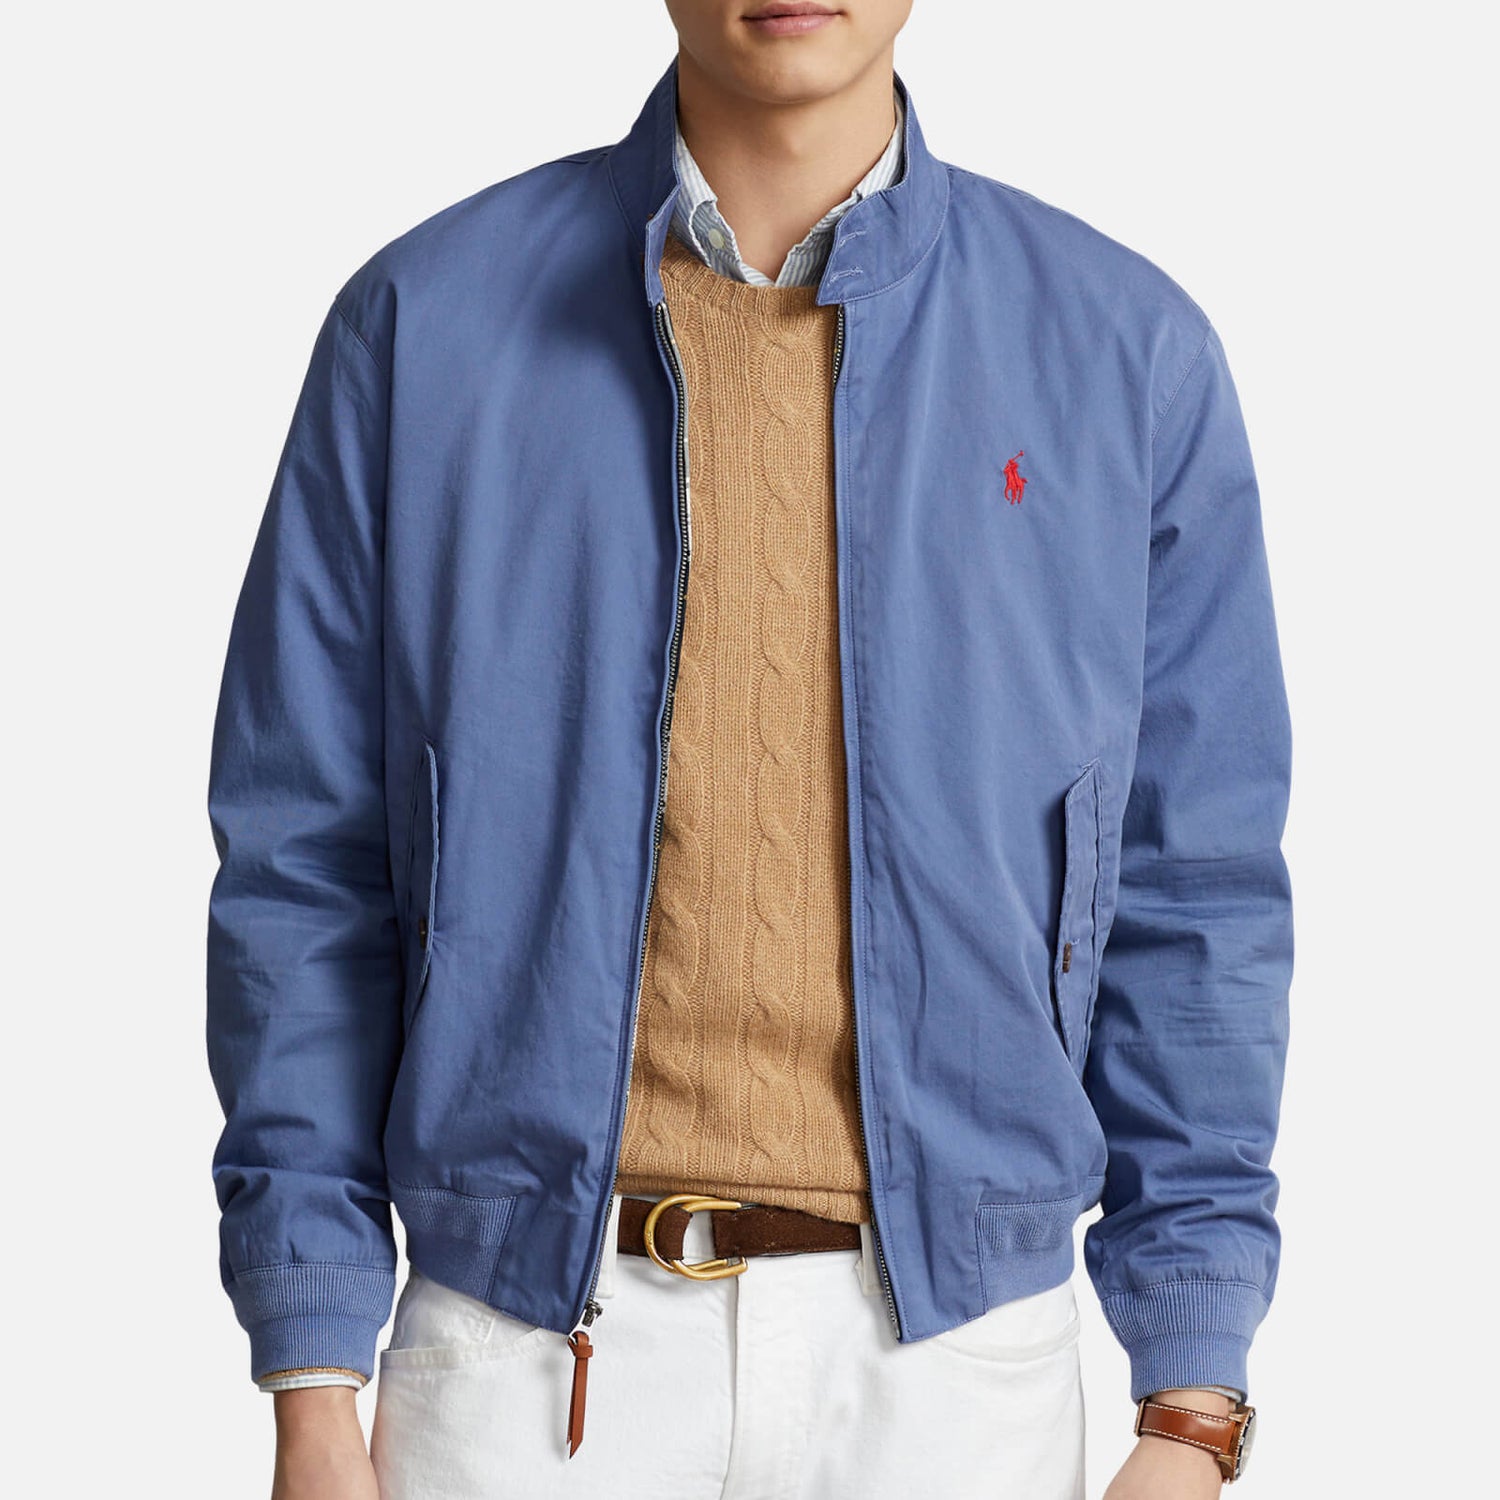 Polo Ralph Lauren Cotton Twill Jacket - S